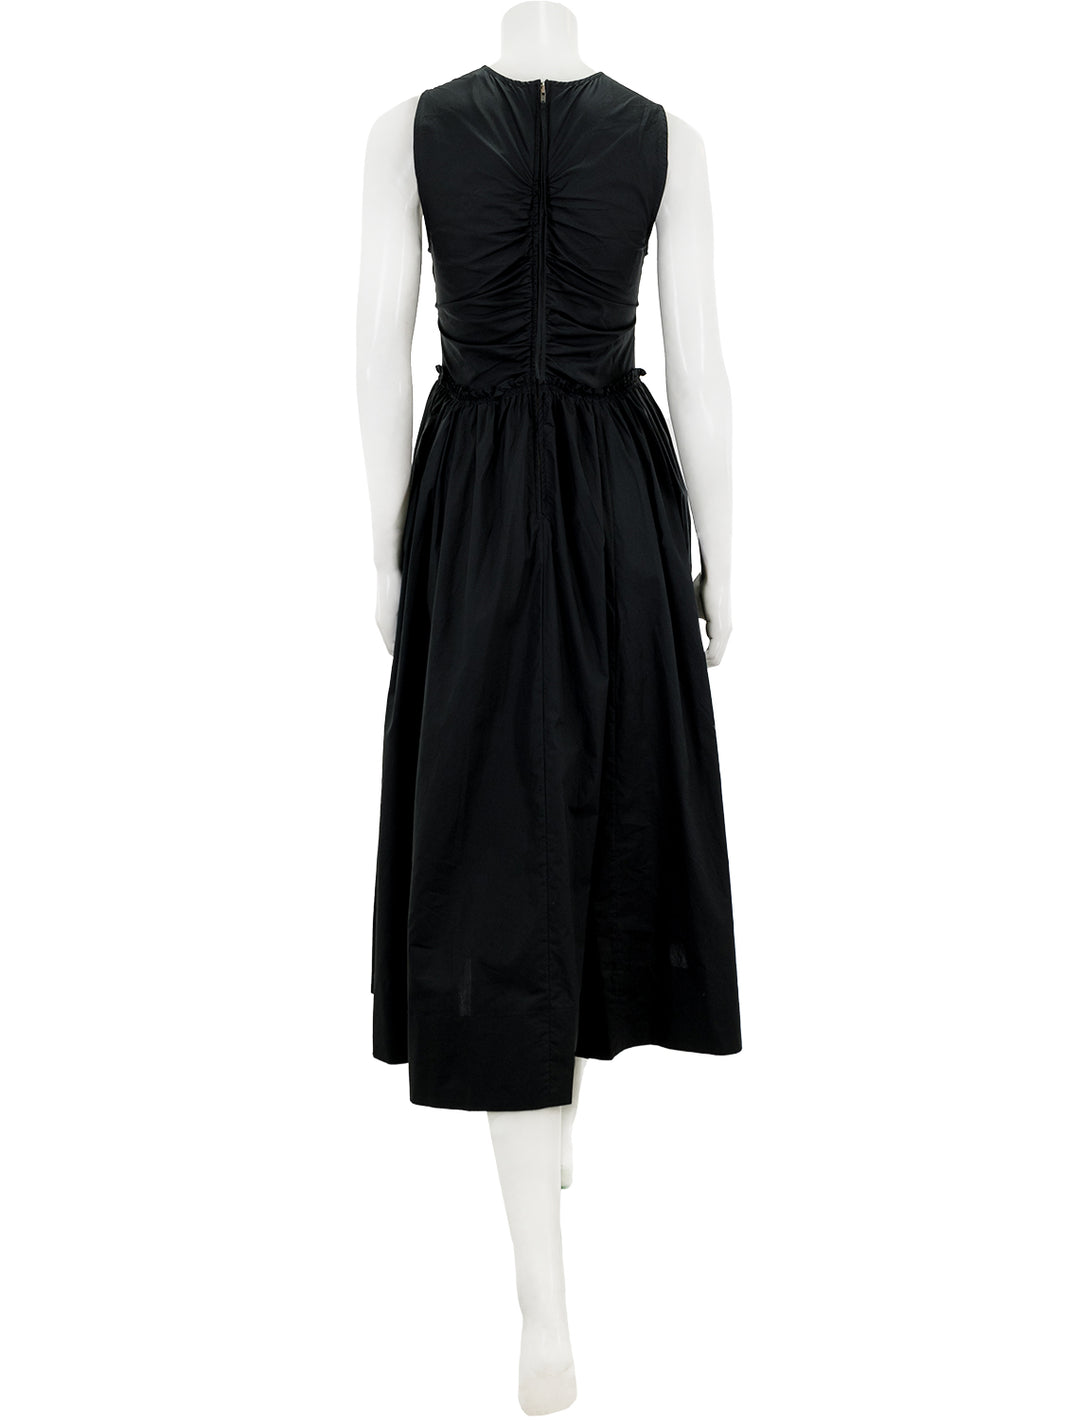 Back view of Ulla Johnson's mimi dress in noir.